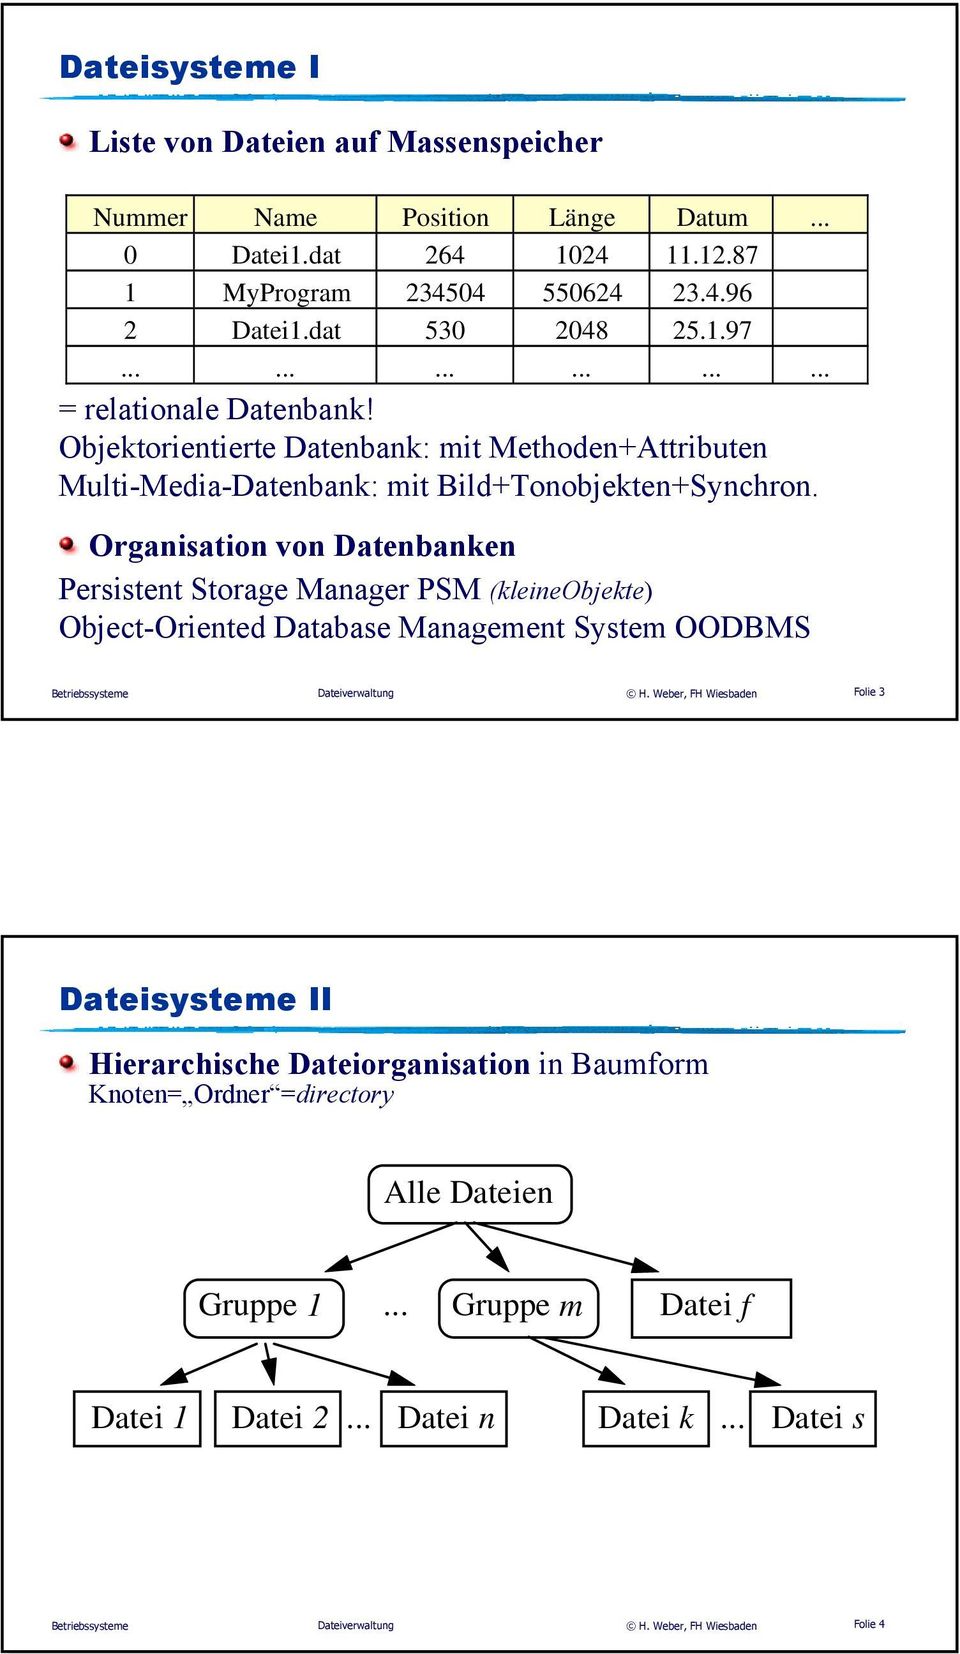 Objektorientierte Datenbank: mit Methoden+Attributen Multi-Media-Datenbank: mit Bild+Tonobjekten+Synchron.